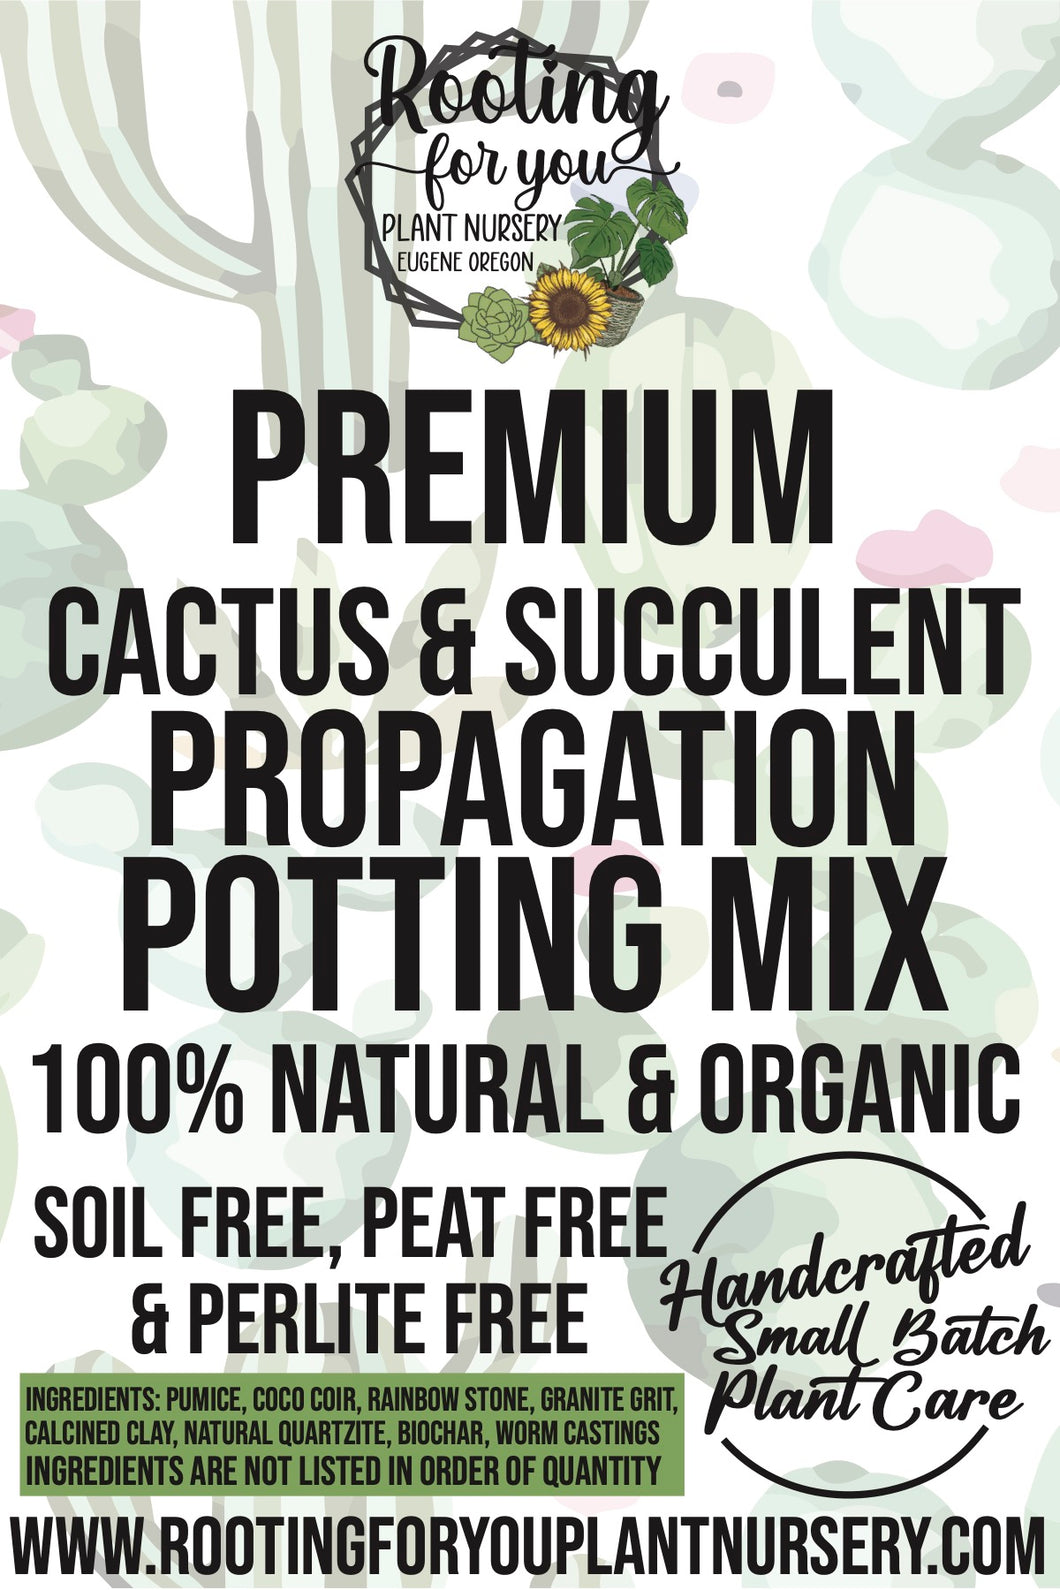 CACTUS & SUCCULENT Propagation Premium Potting Mix